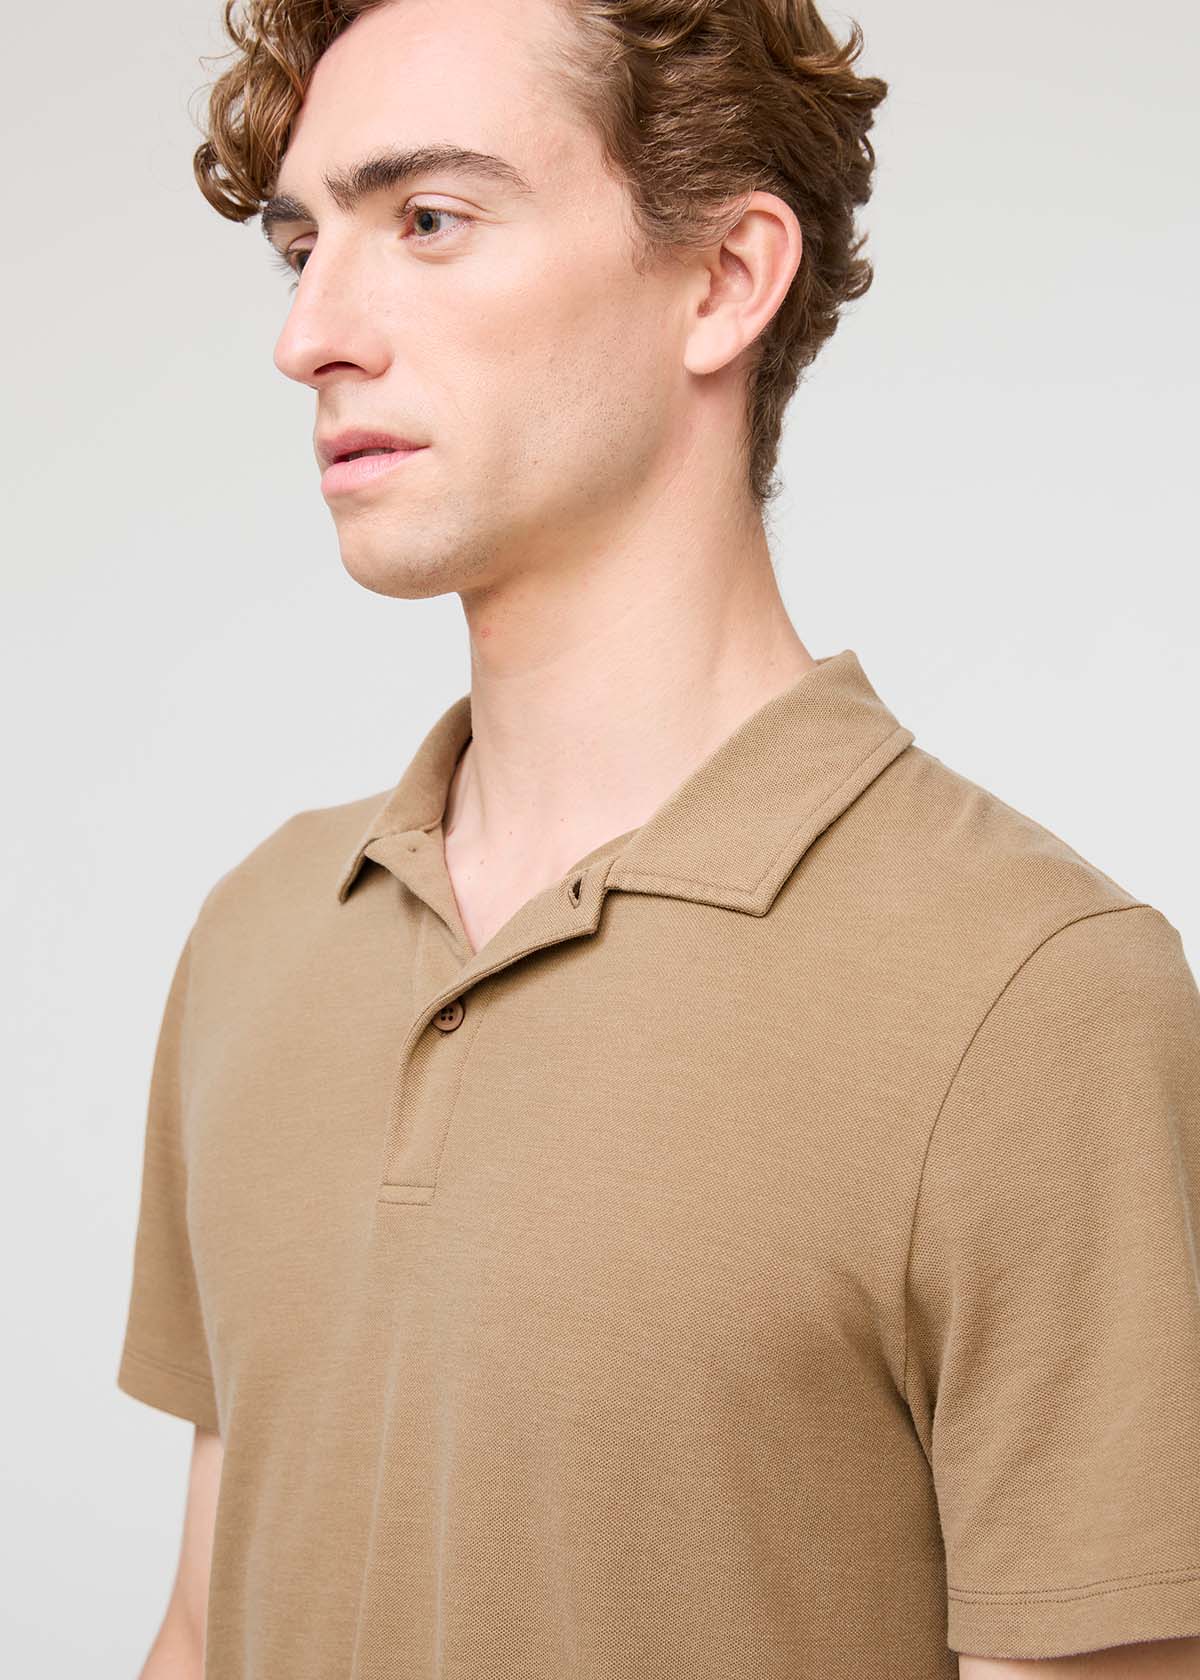 mens breathable beige polo neckline detail